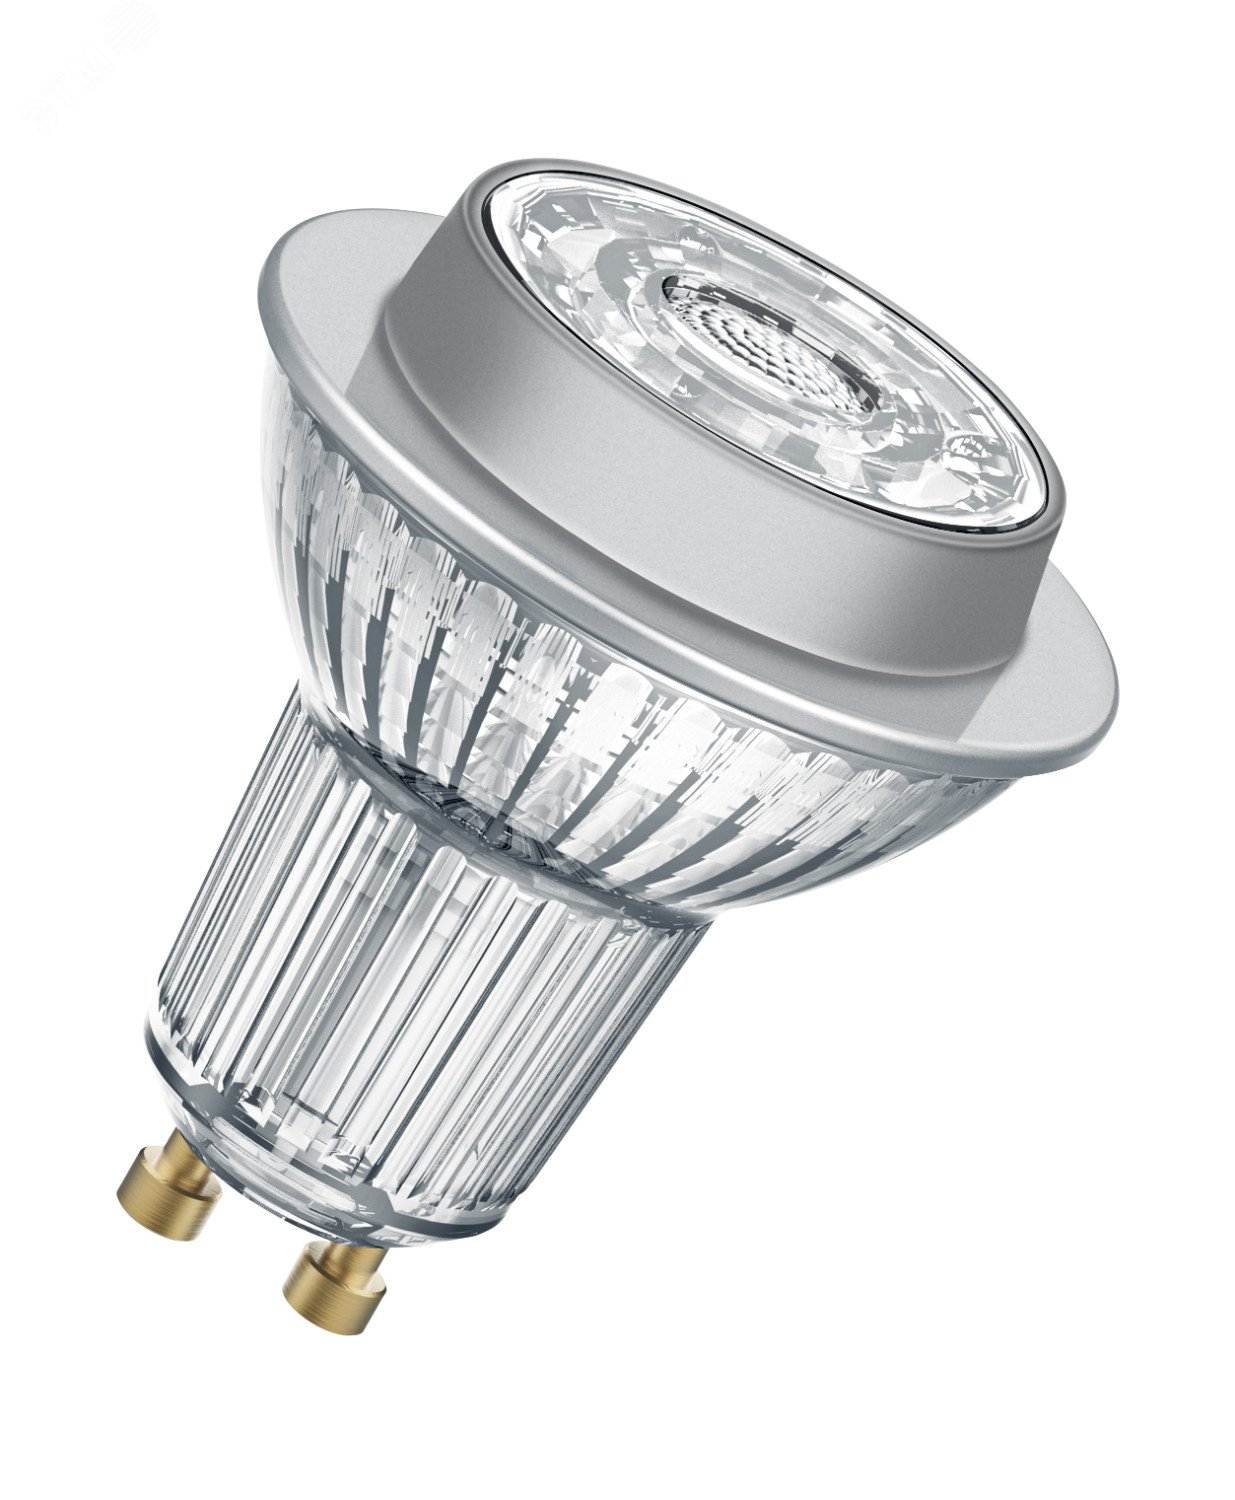 Лампа светодиодная Gauss LED MR16 5W GU10 K - описание, фото и преимущества